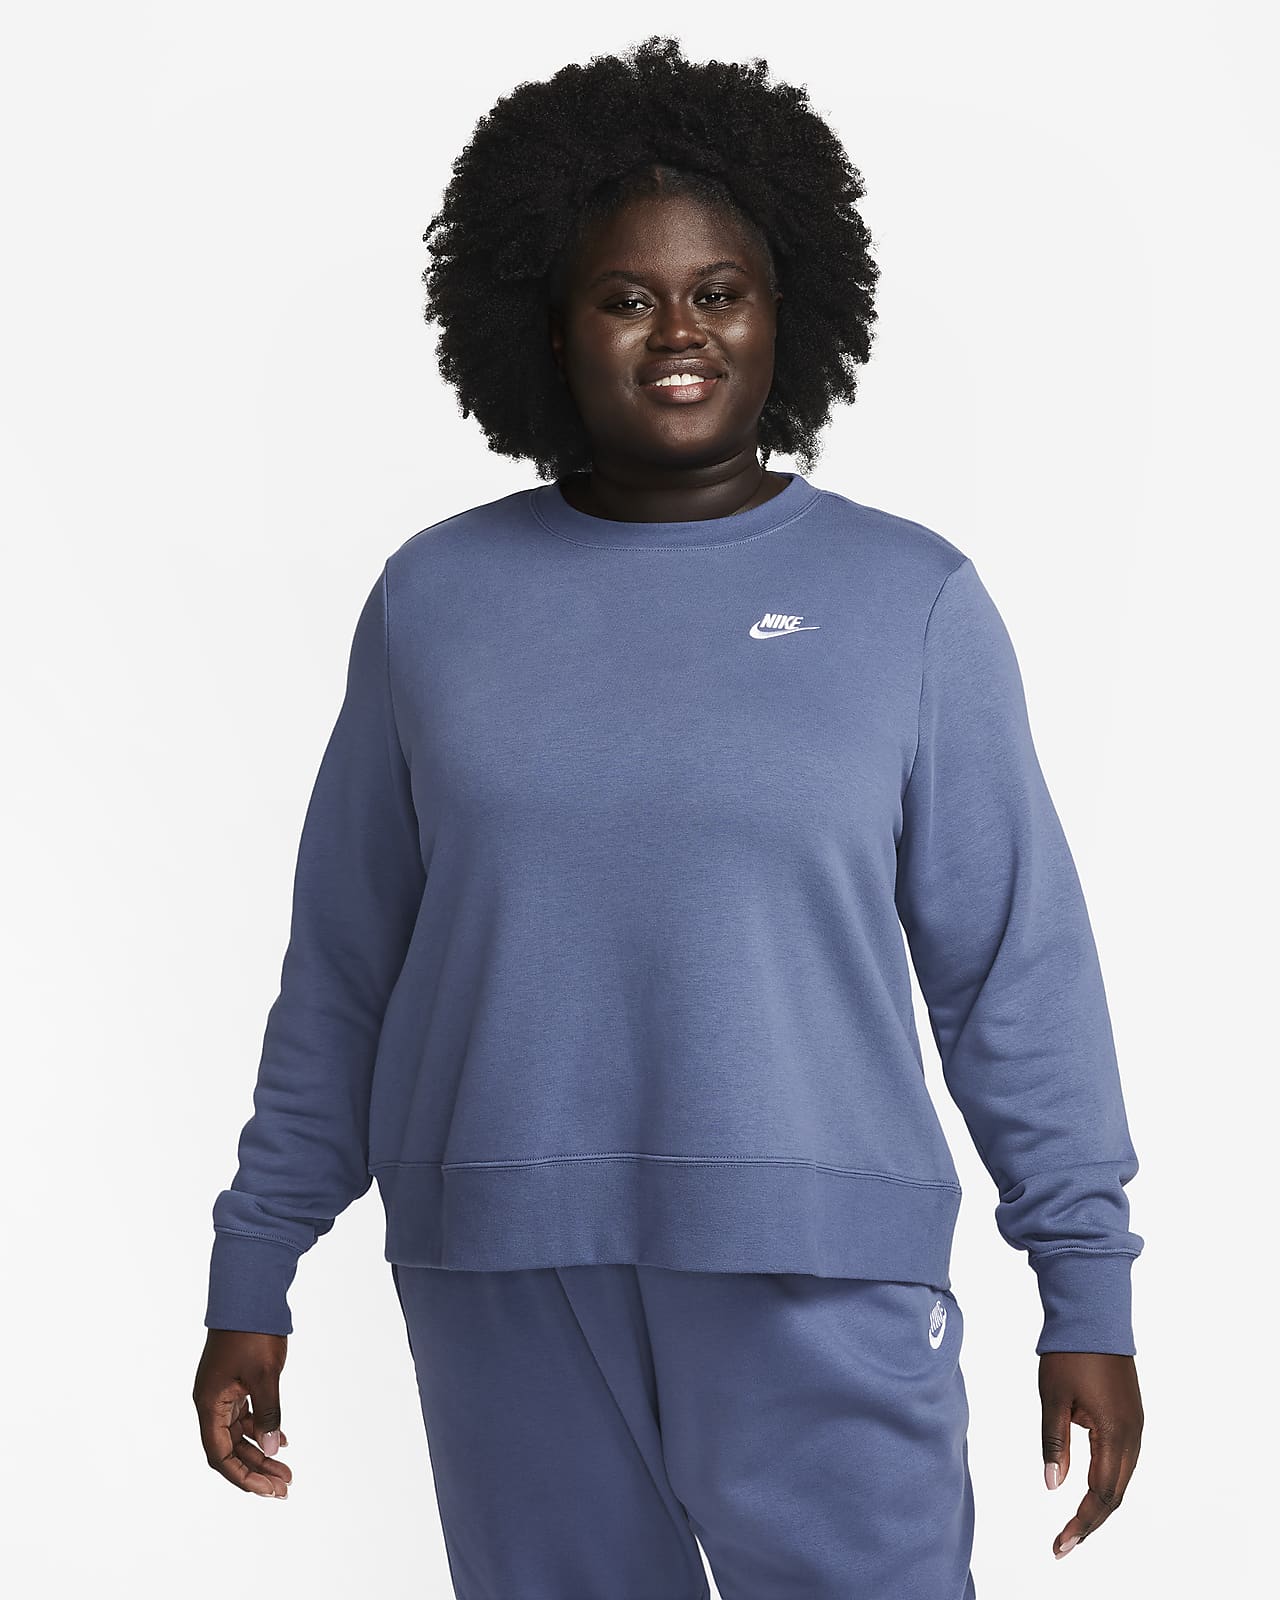 Sportswear Club Women's Sweatshirt (Plus Nike .com